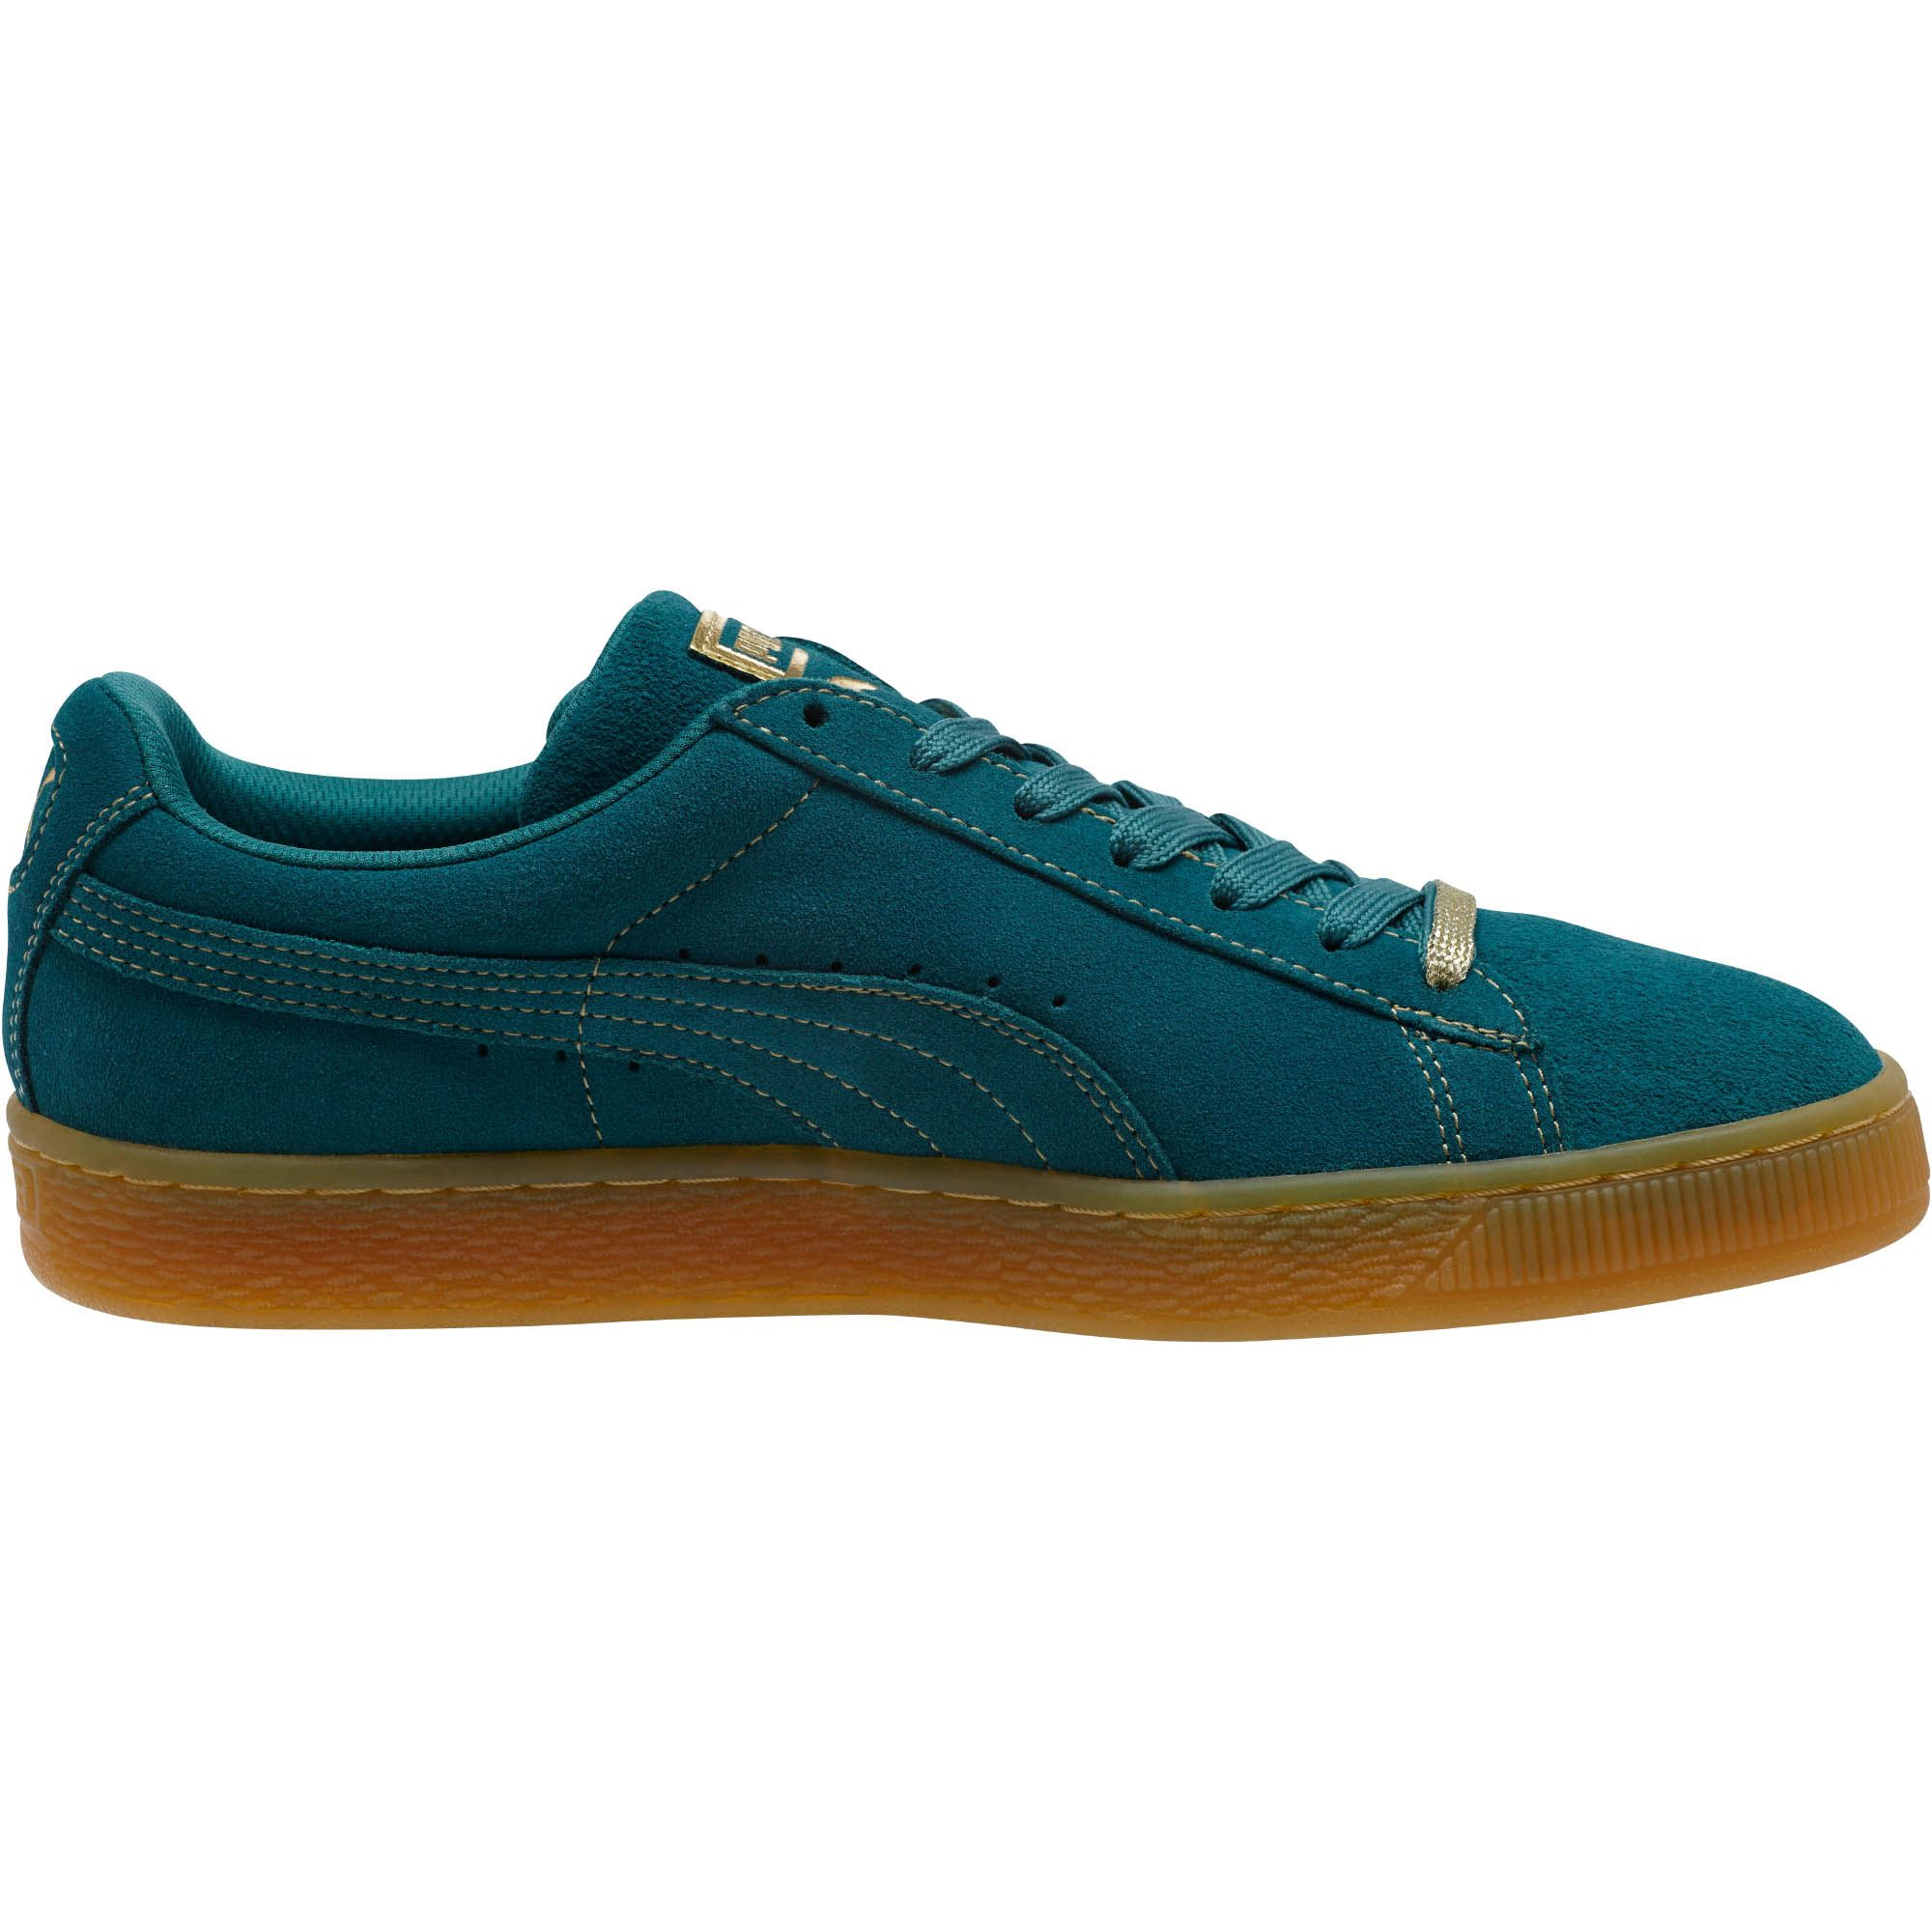 PUMA Suede Classic Gold Foil Men's Sneakers in Blue for Men - Lyst